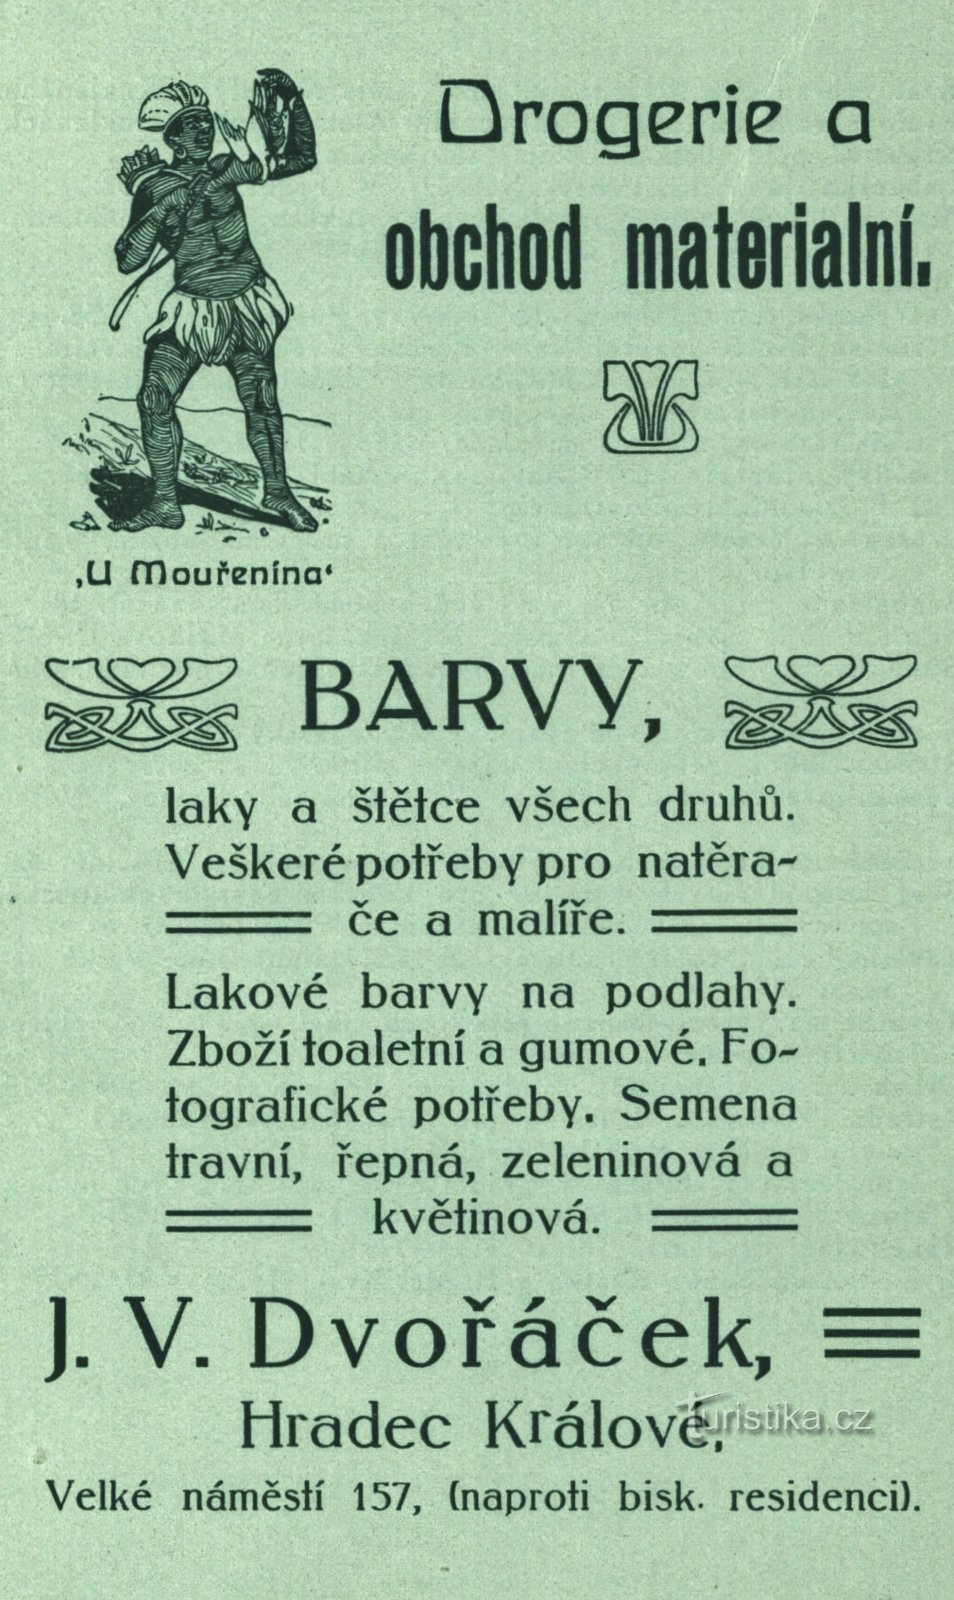 Period advertisement of Dvořáček's drug store from 1896